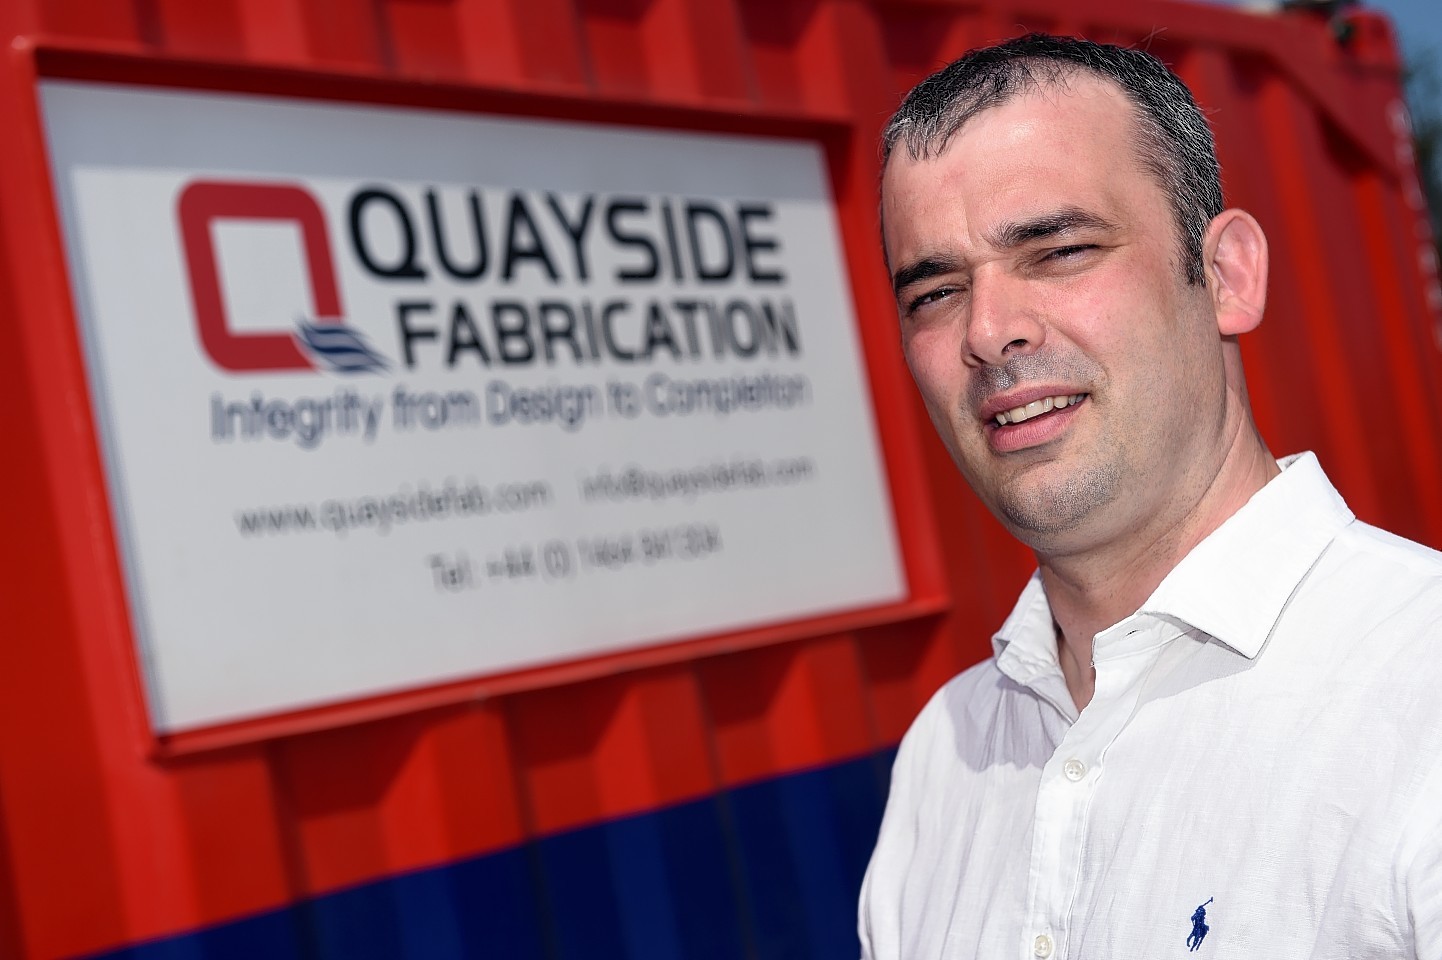 David Duncan, director of Quayside Fabrication